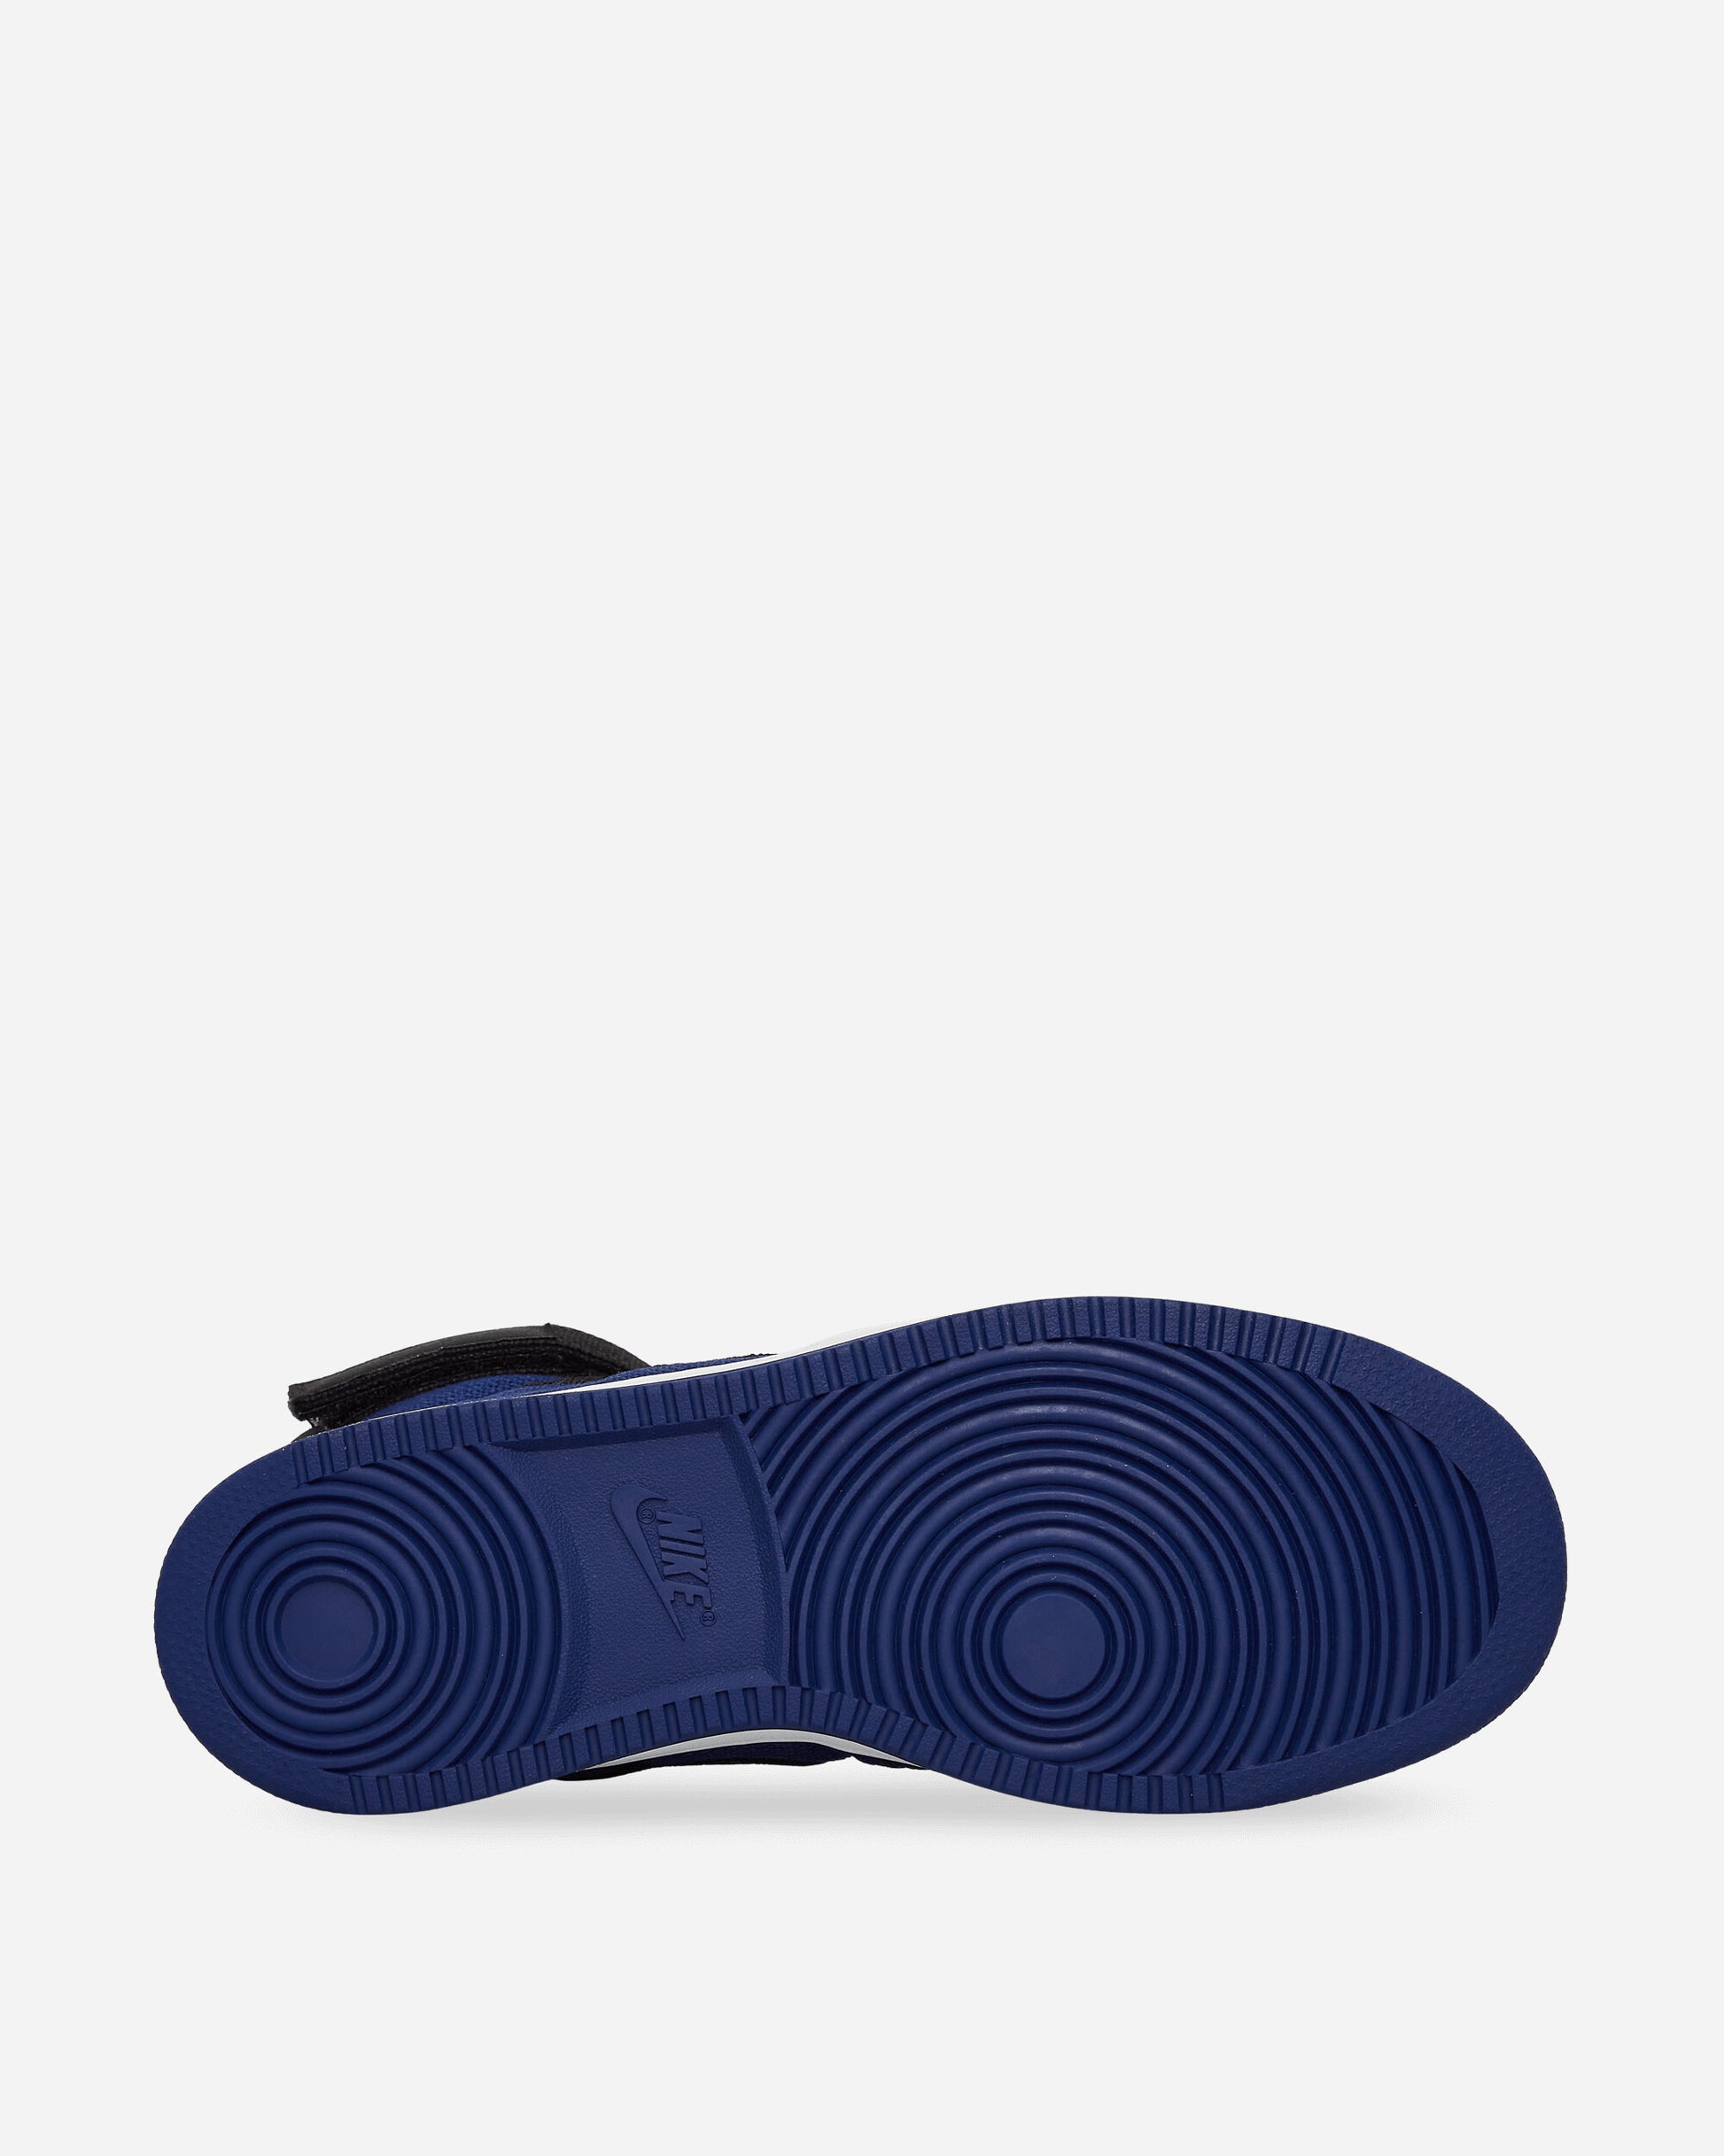 Nike Nike Vandal Sp Deep Royal Blue/Black/White Sneakers High DX5425-400